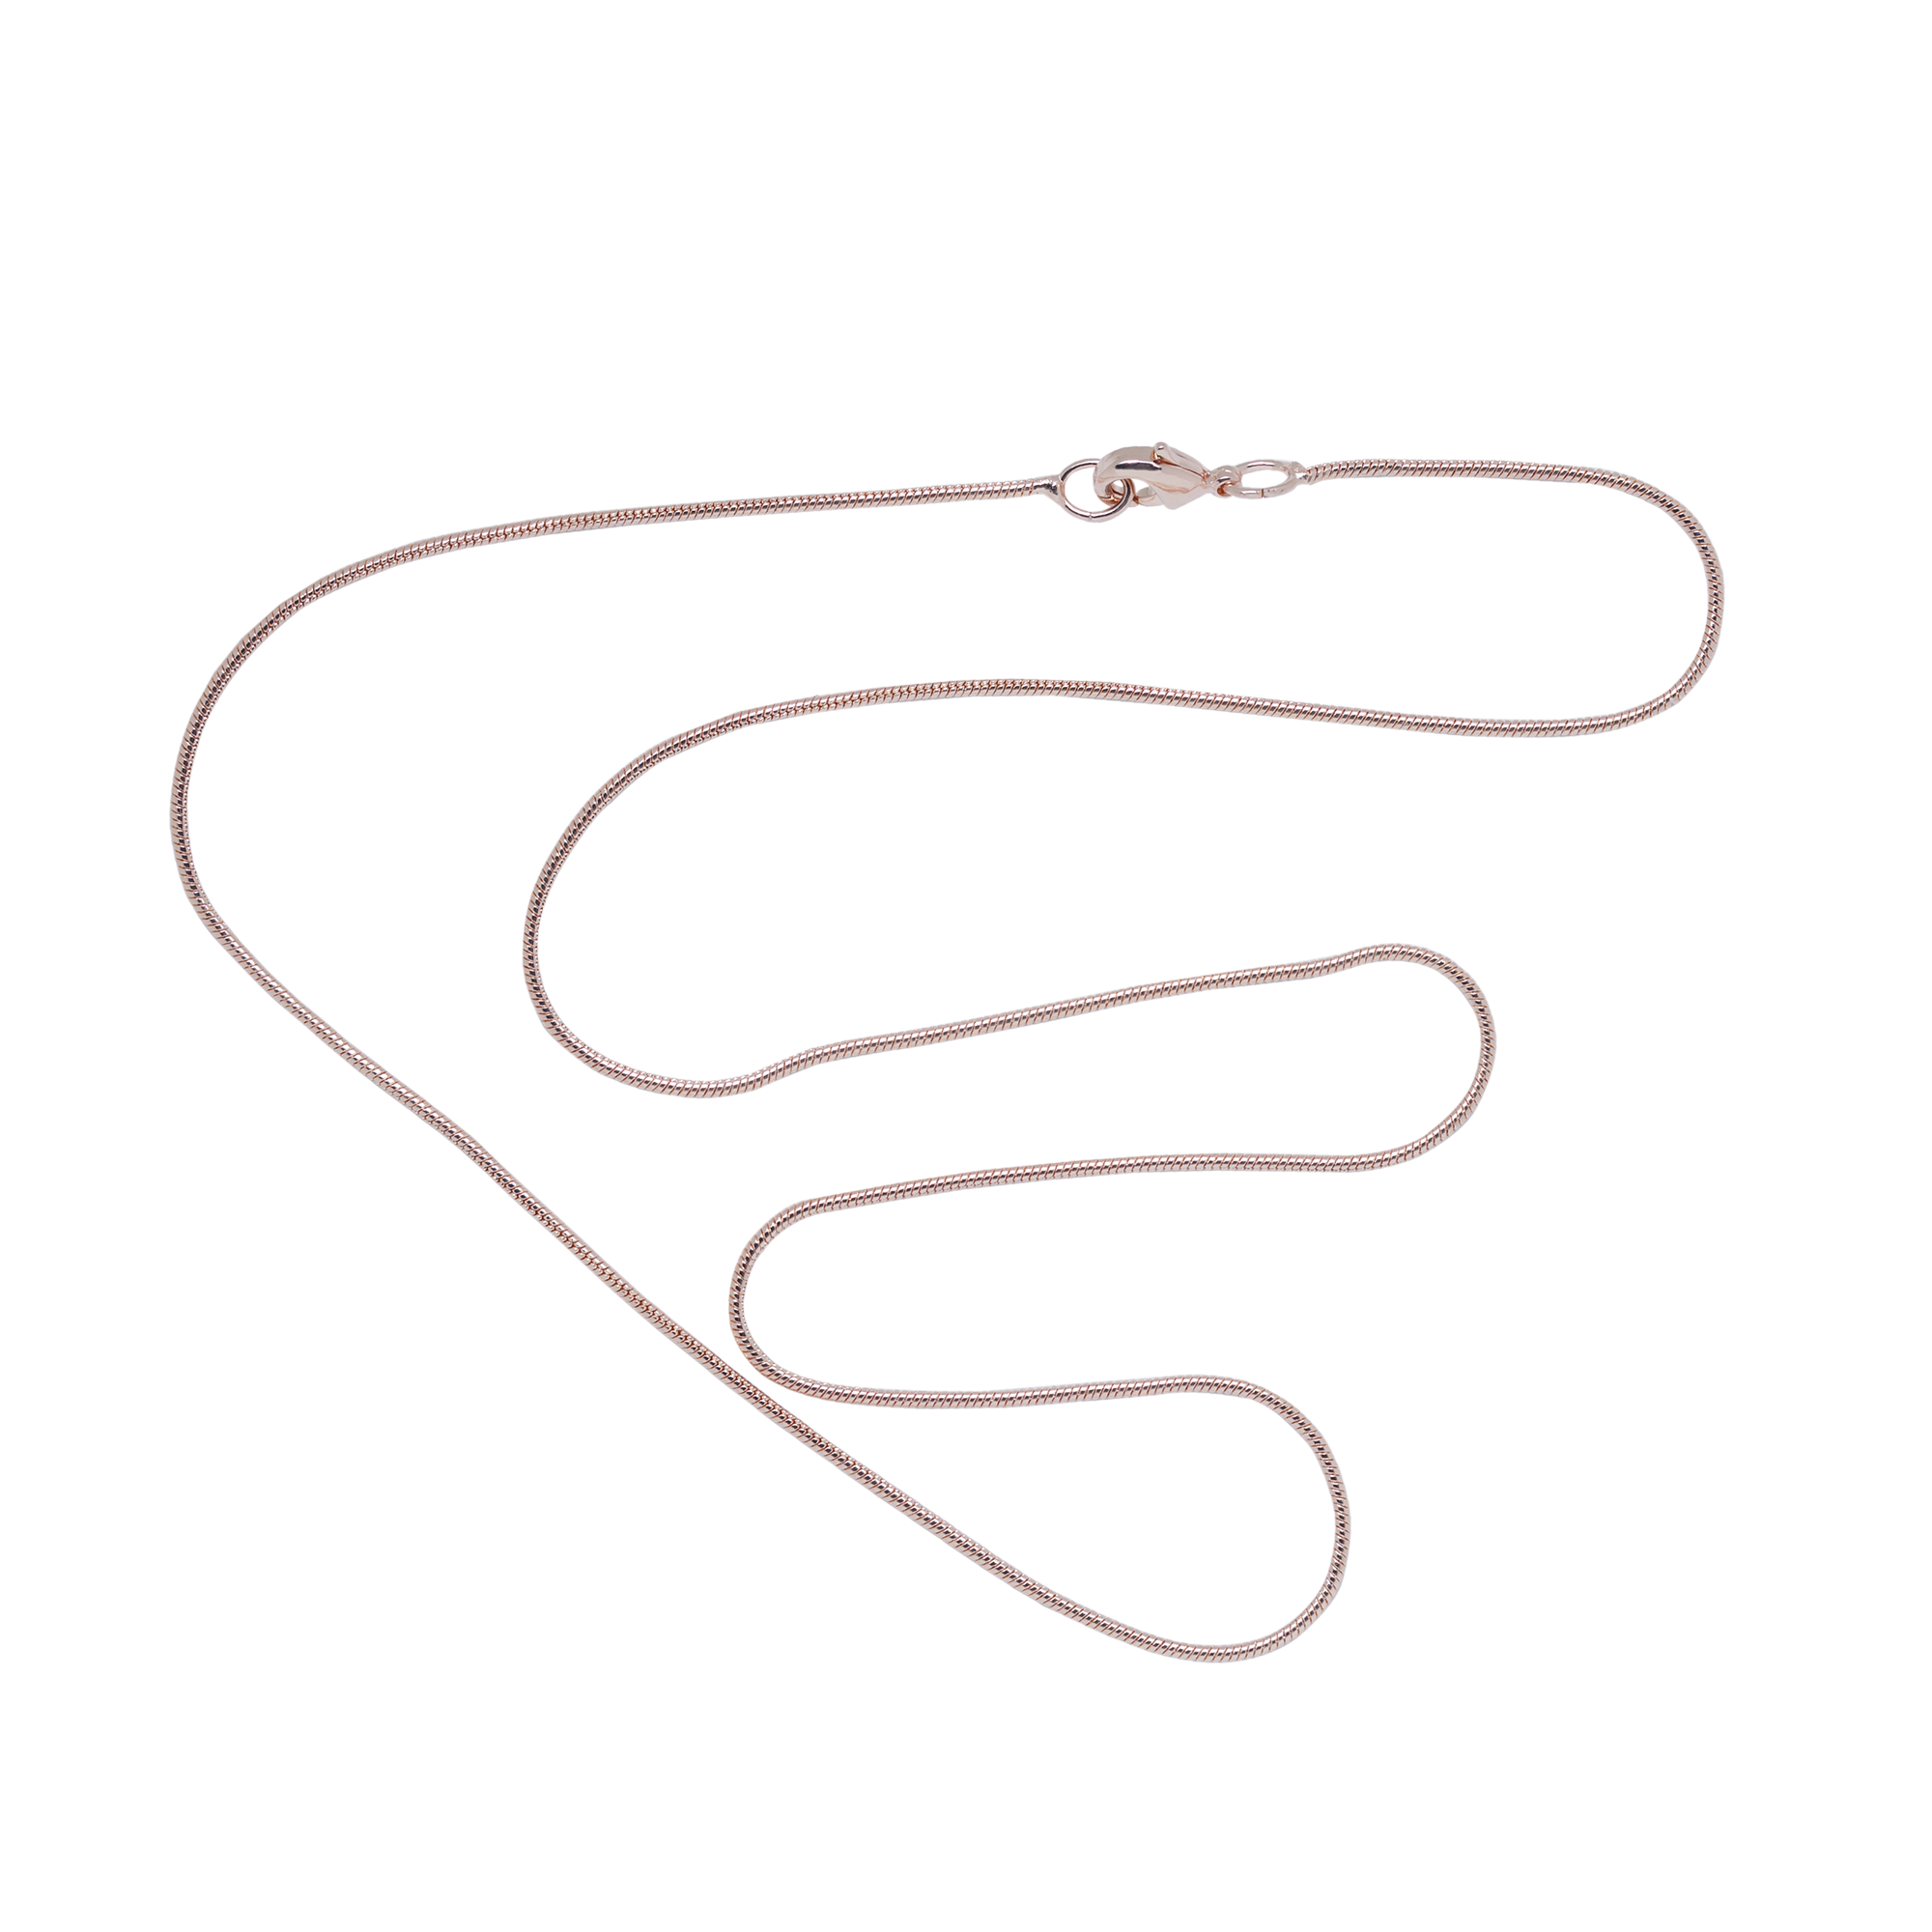 CH.JAK.4001 - 18" Polished Copper Snake Chain